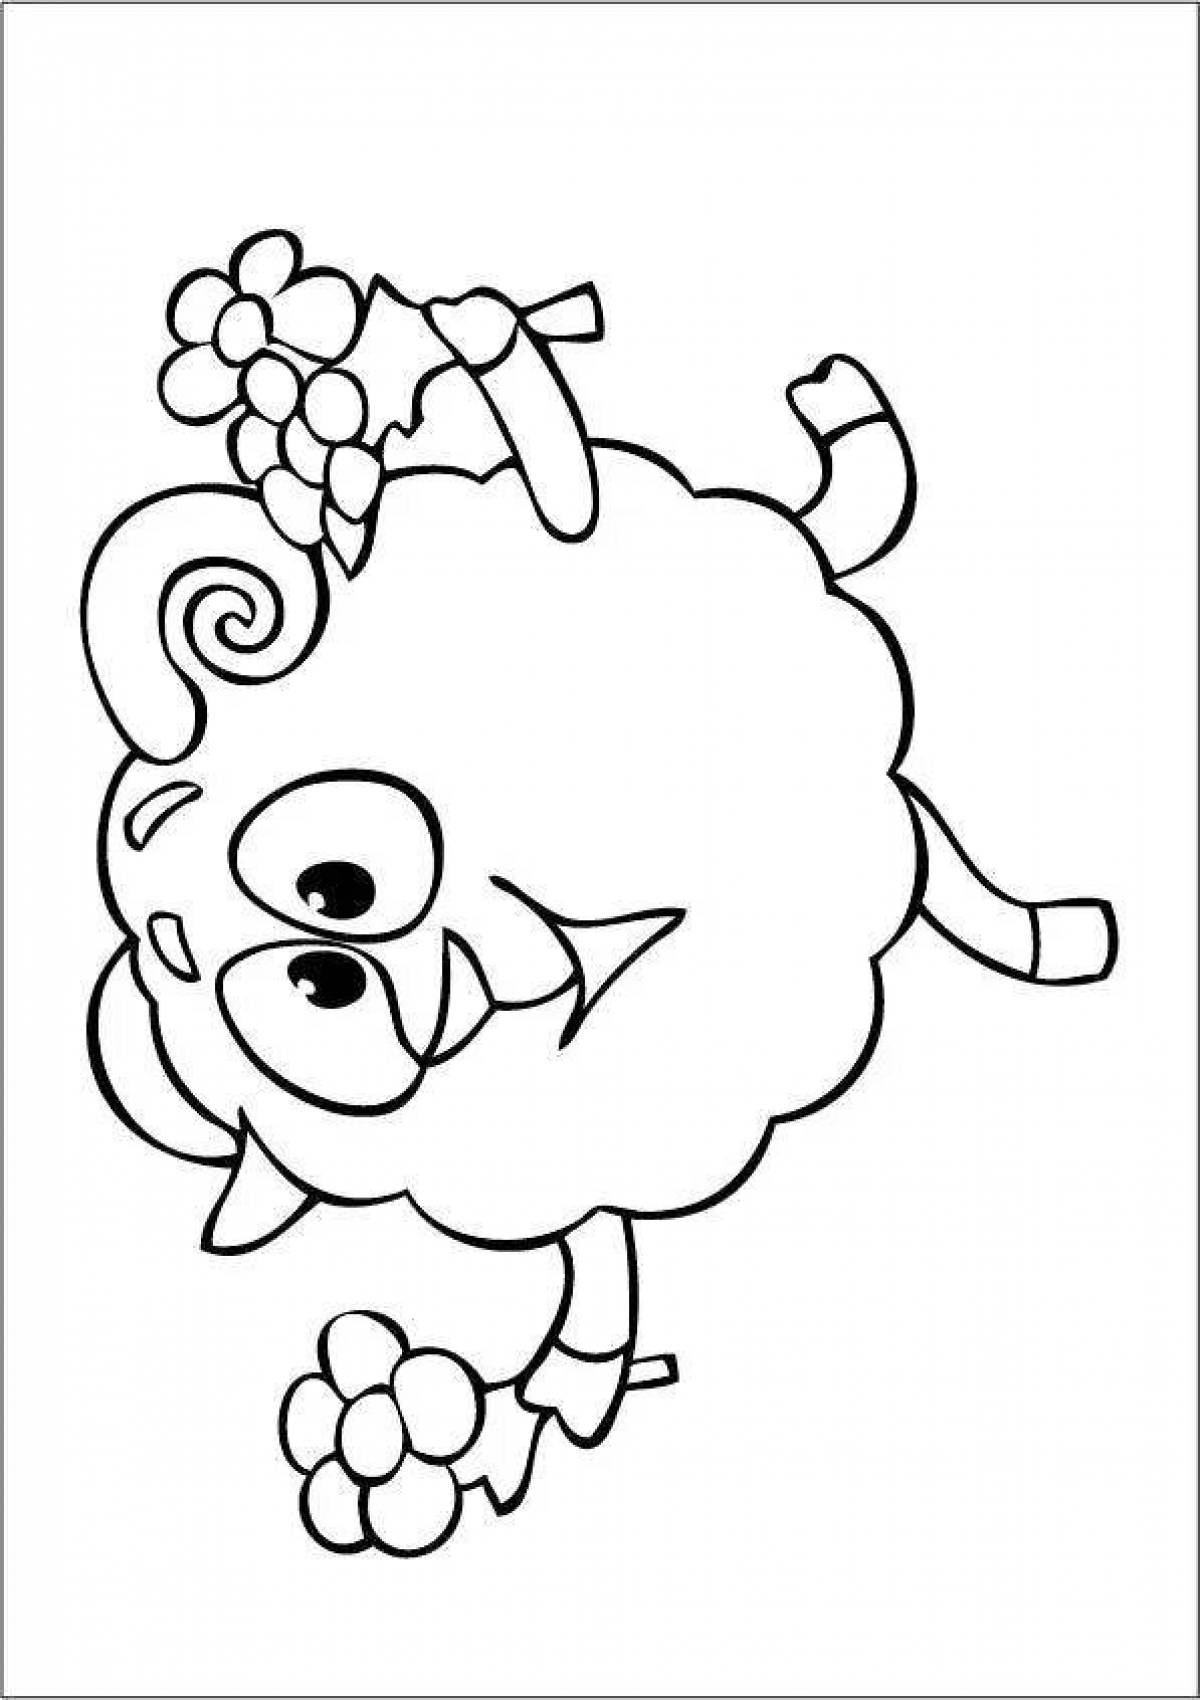 Lamb wavy coloring book